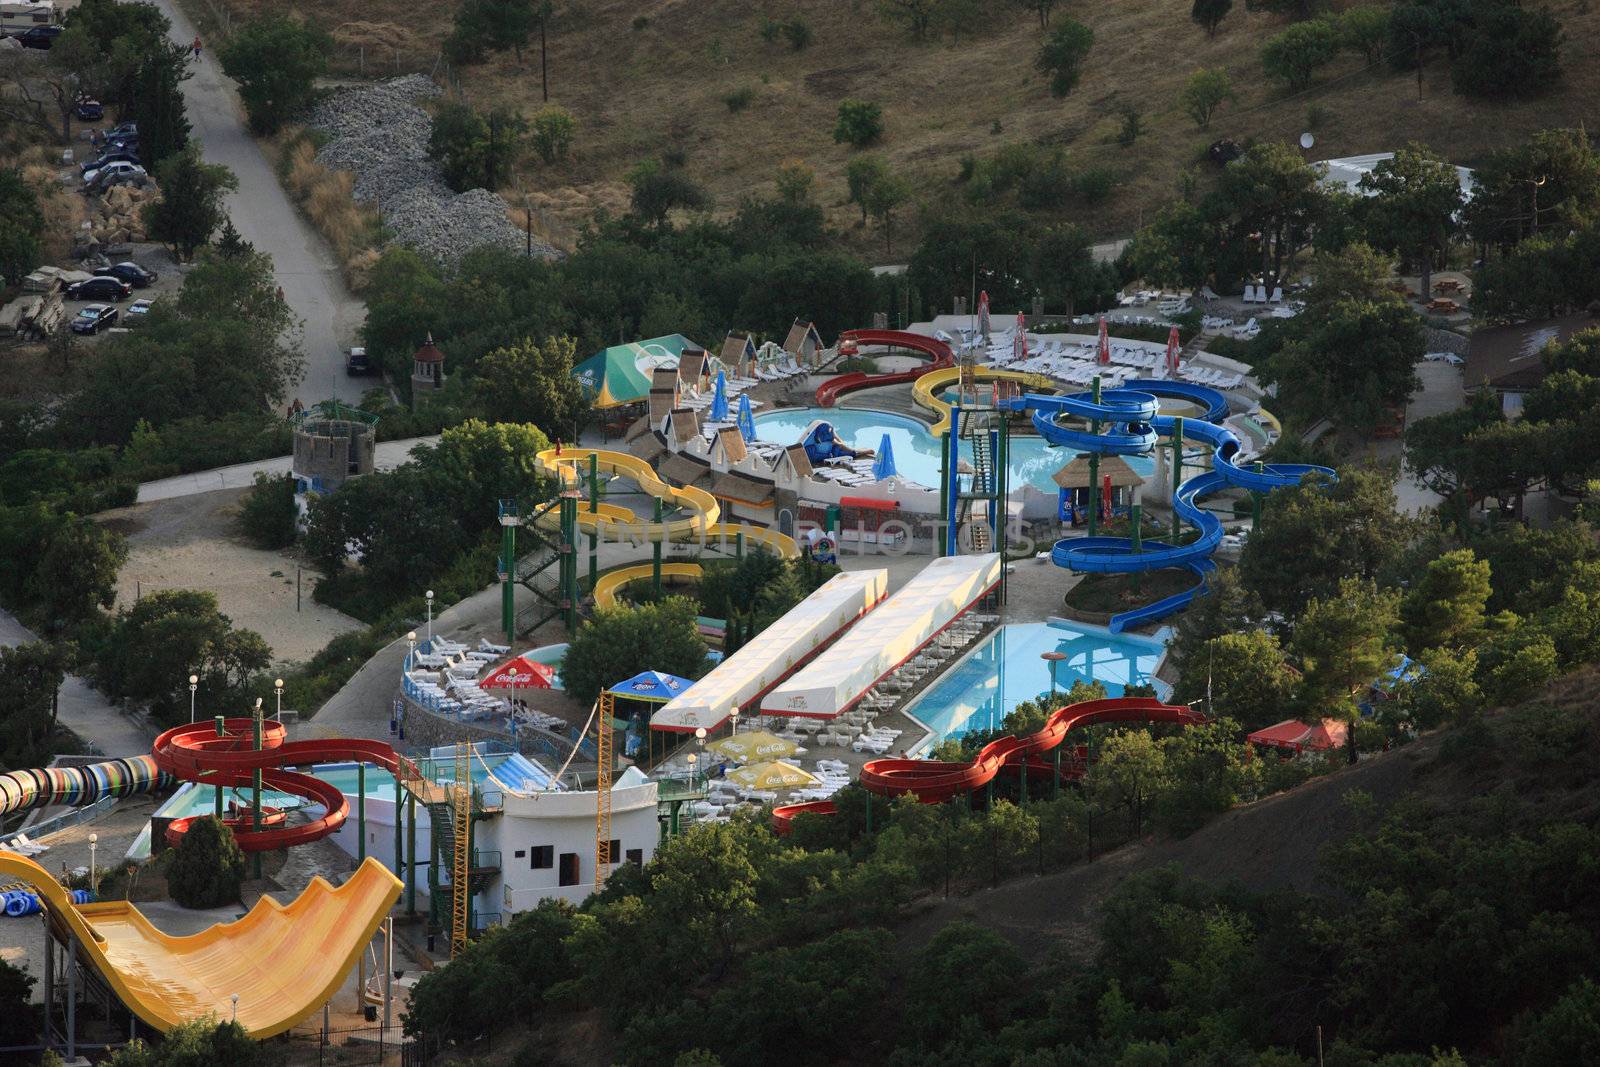 aquapark, entertainment, water, hills, rest, pleasure, sports, health